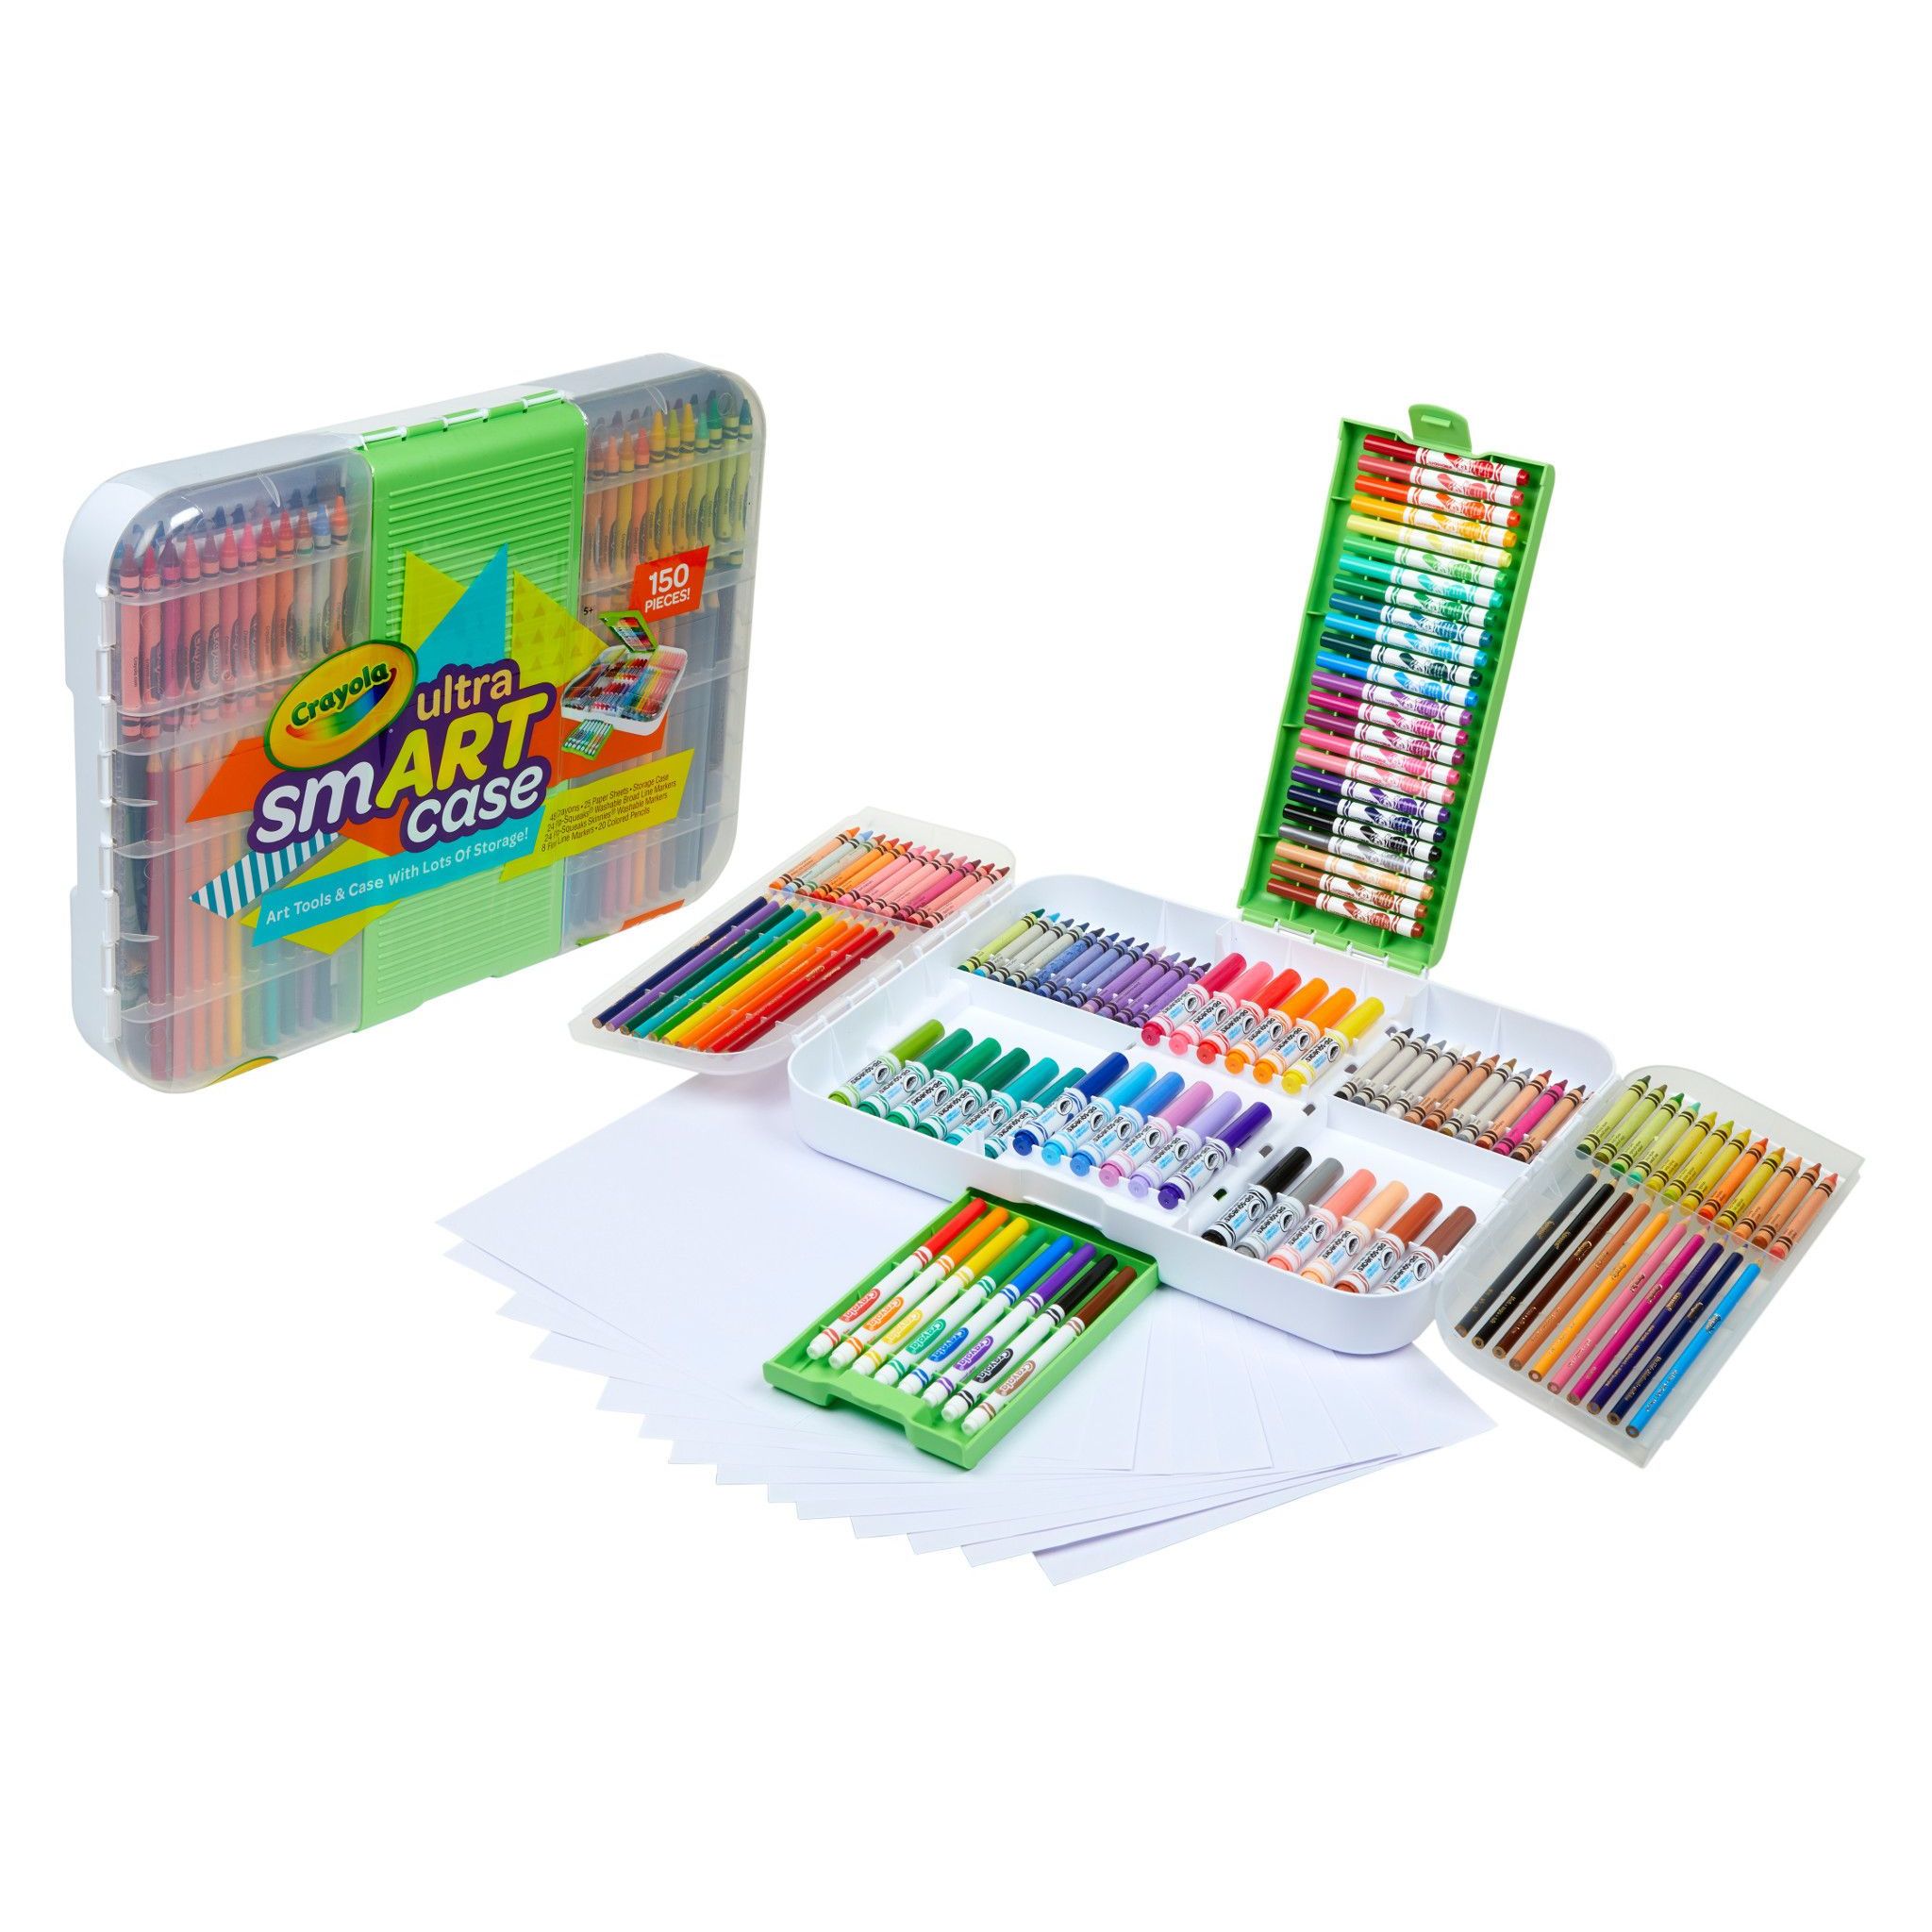 Crayola Ultra SmART Case, School Supplies, Markers & Crayons Art Set, Beginner Unisex Child - image 1 of 8